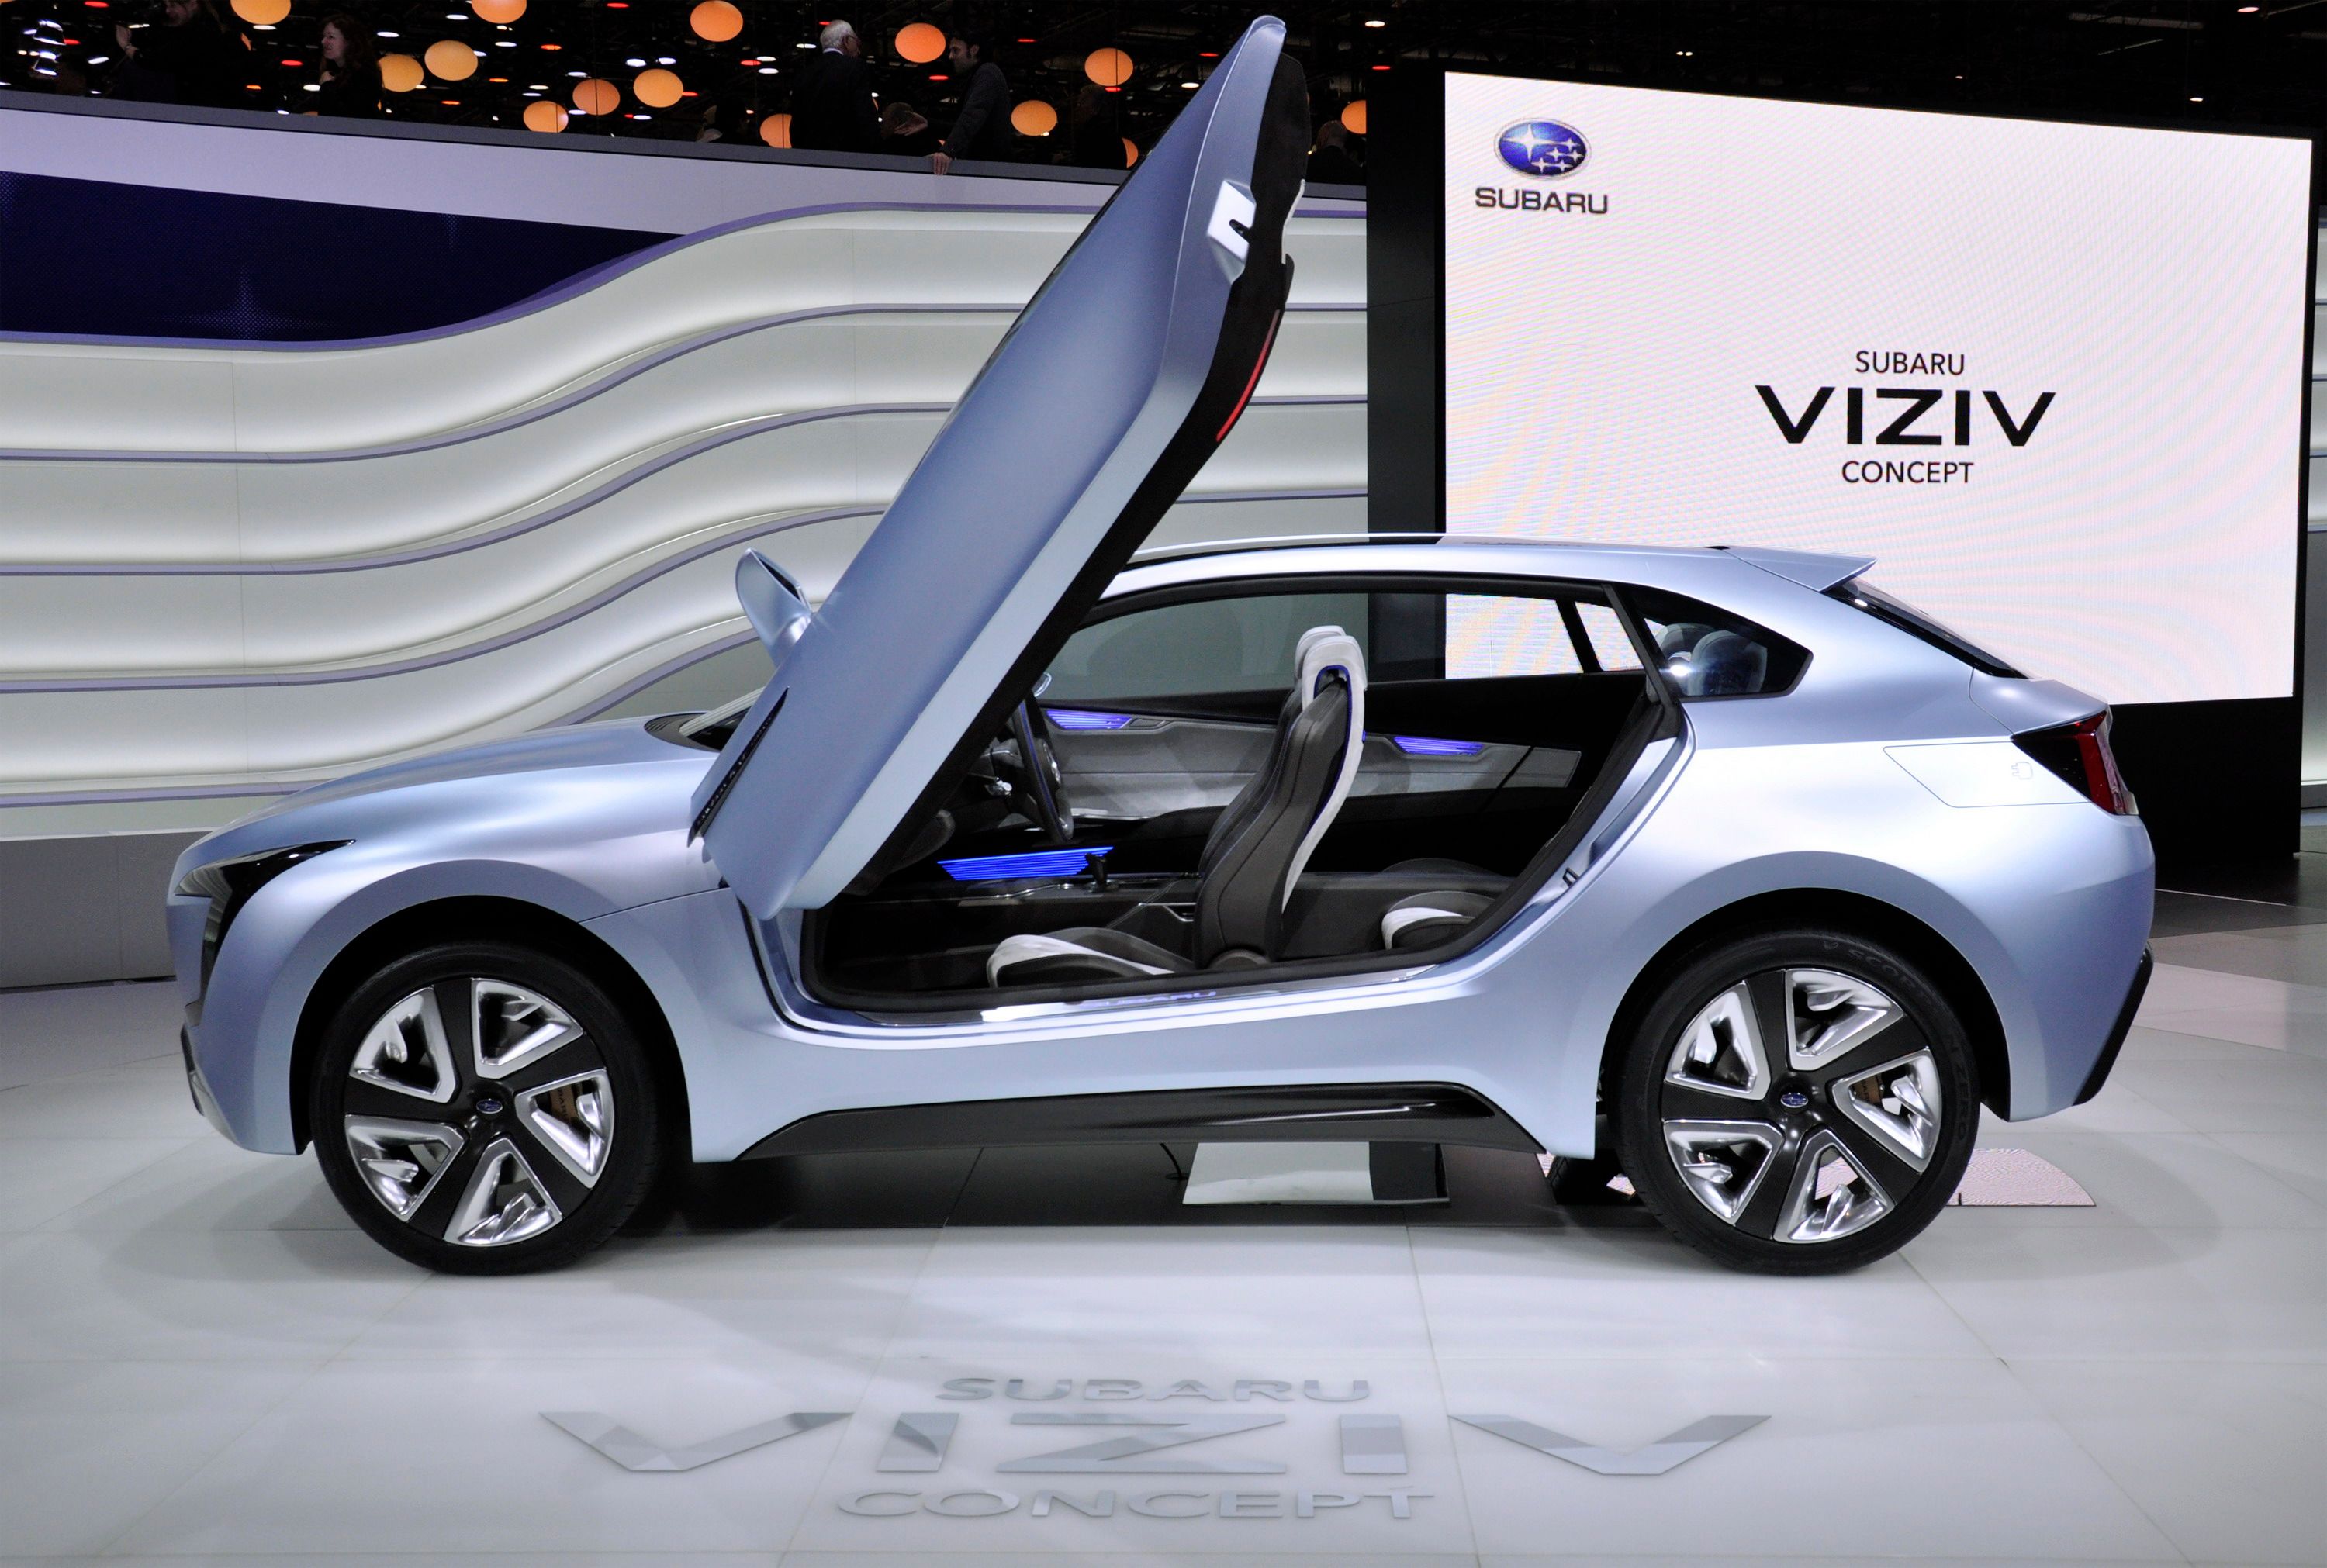 2013 Subaru Viziv Concept